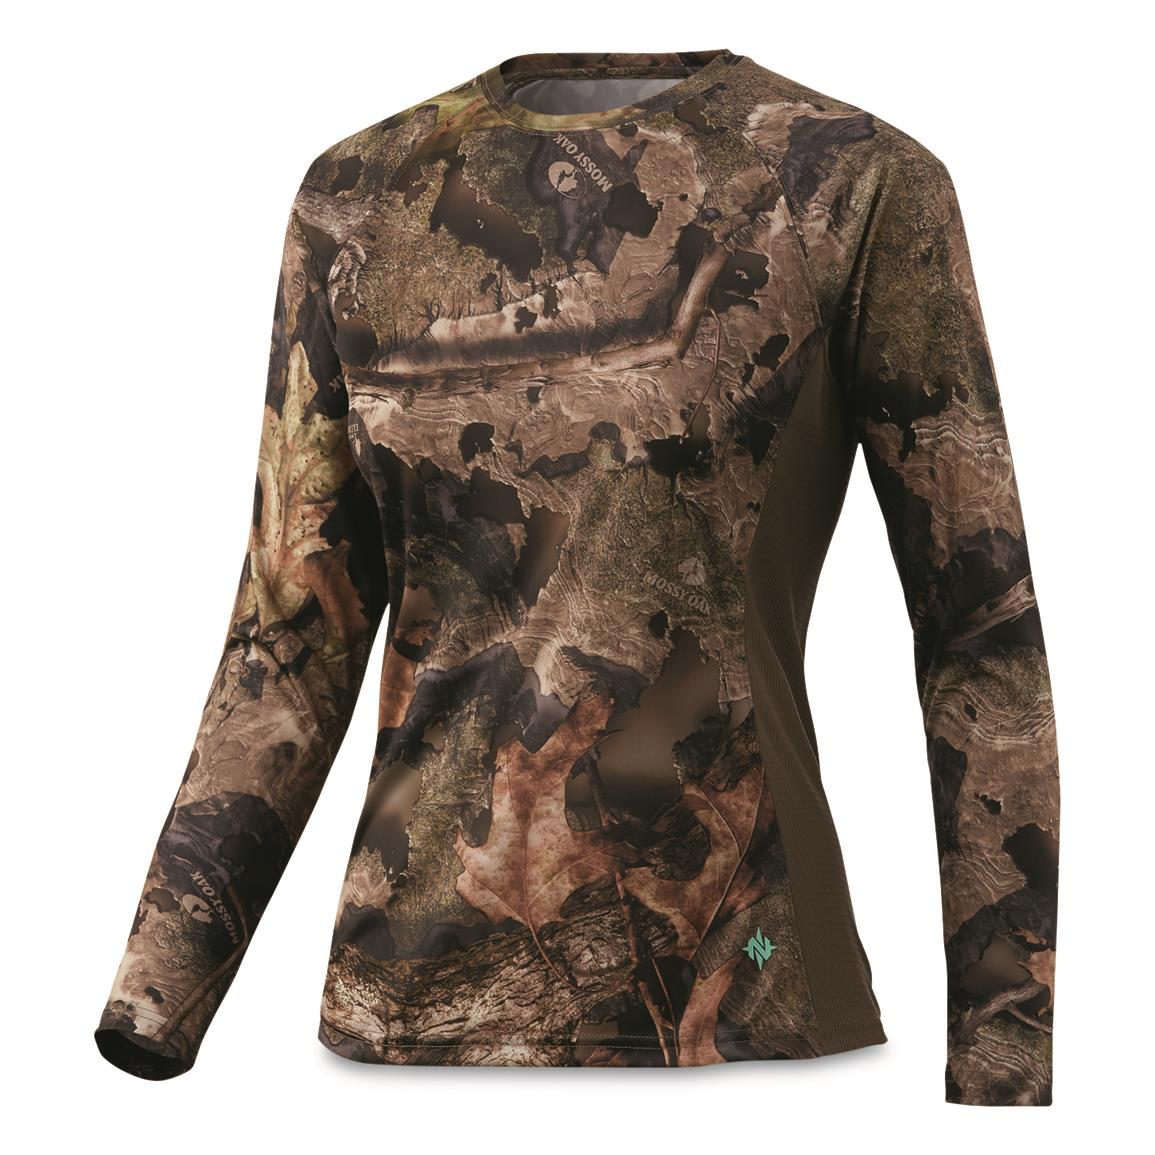 NOMAD Women's Pursuit Camo Long-Sleeve Hunting Shirt, Mossy Oak Droptine